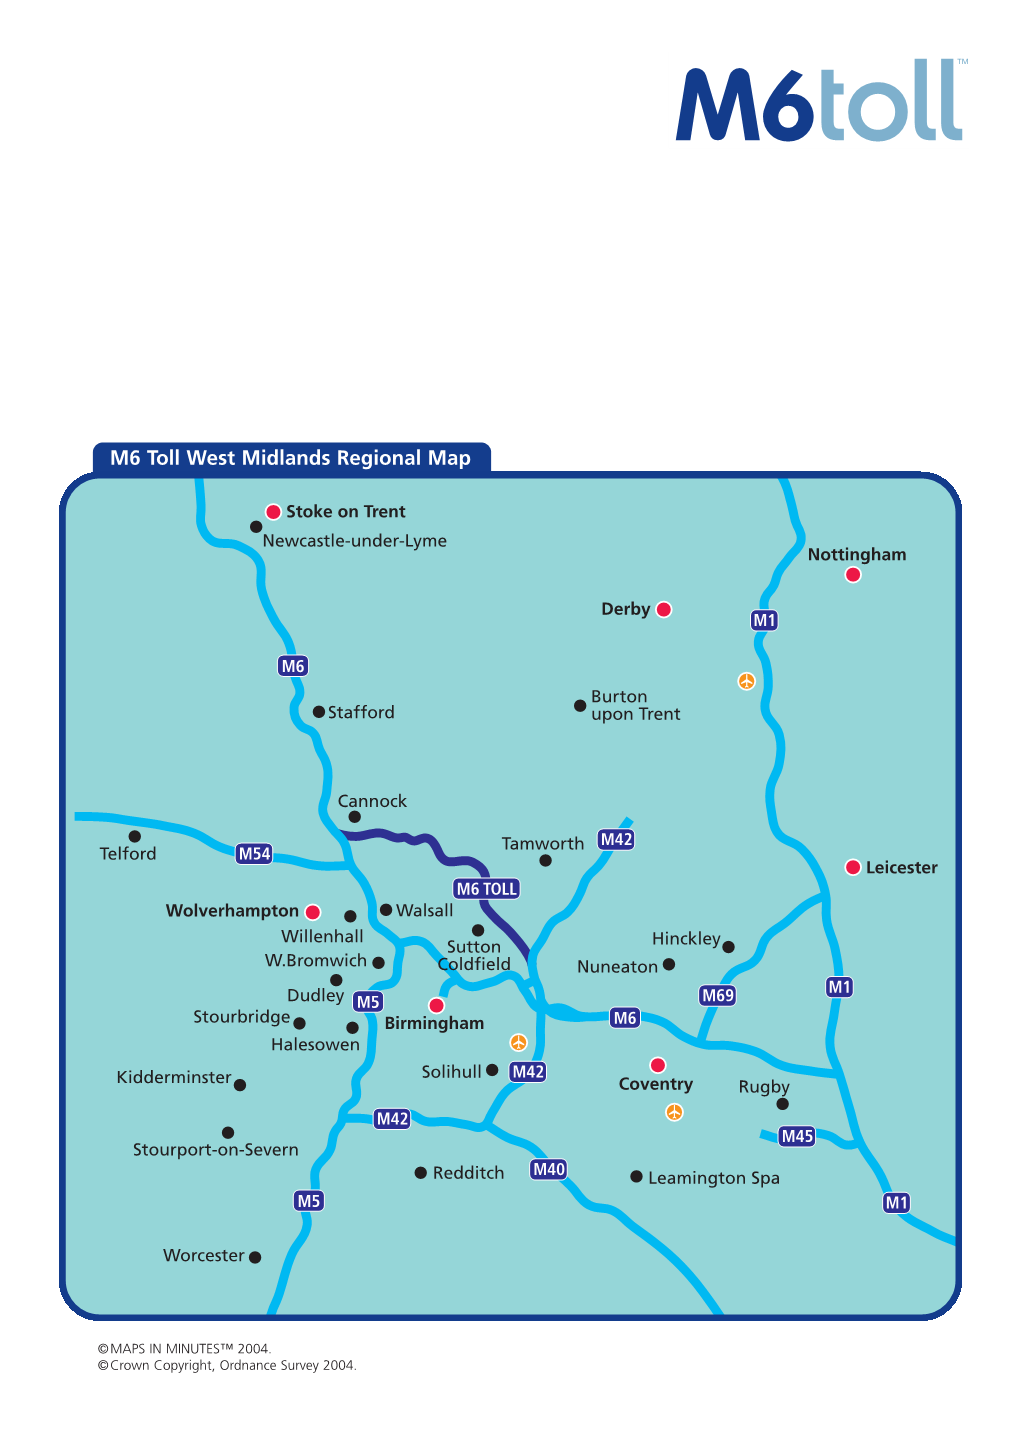 M6 Toll West Midlands Regional Map